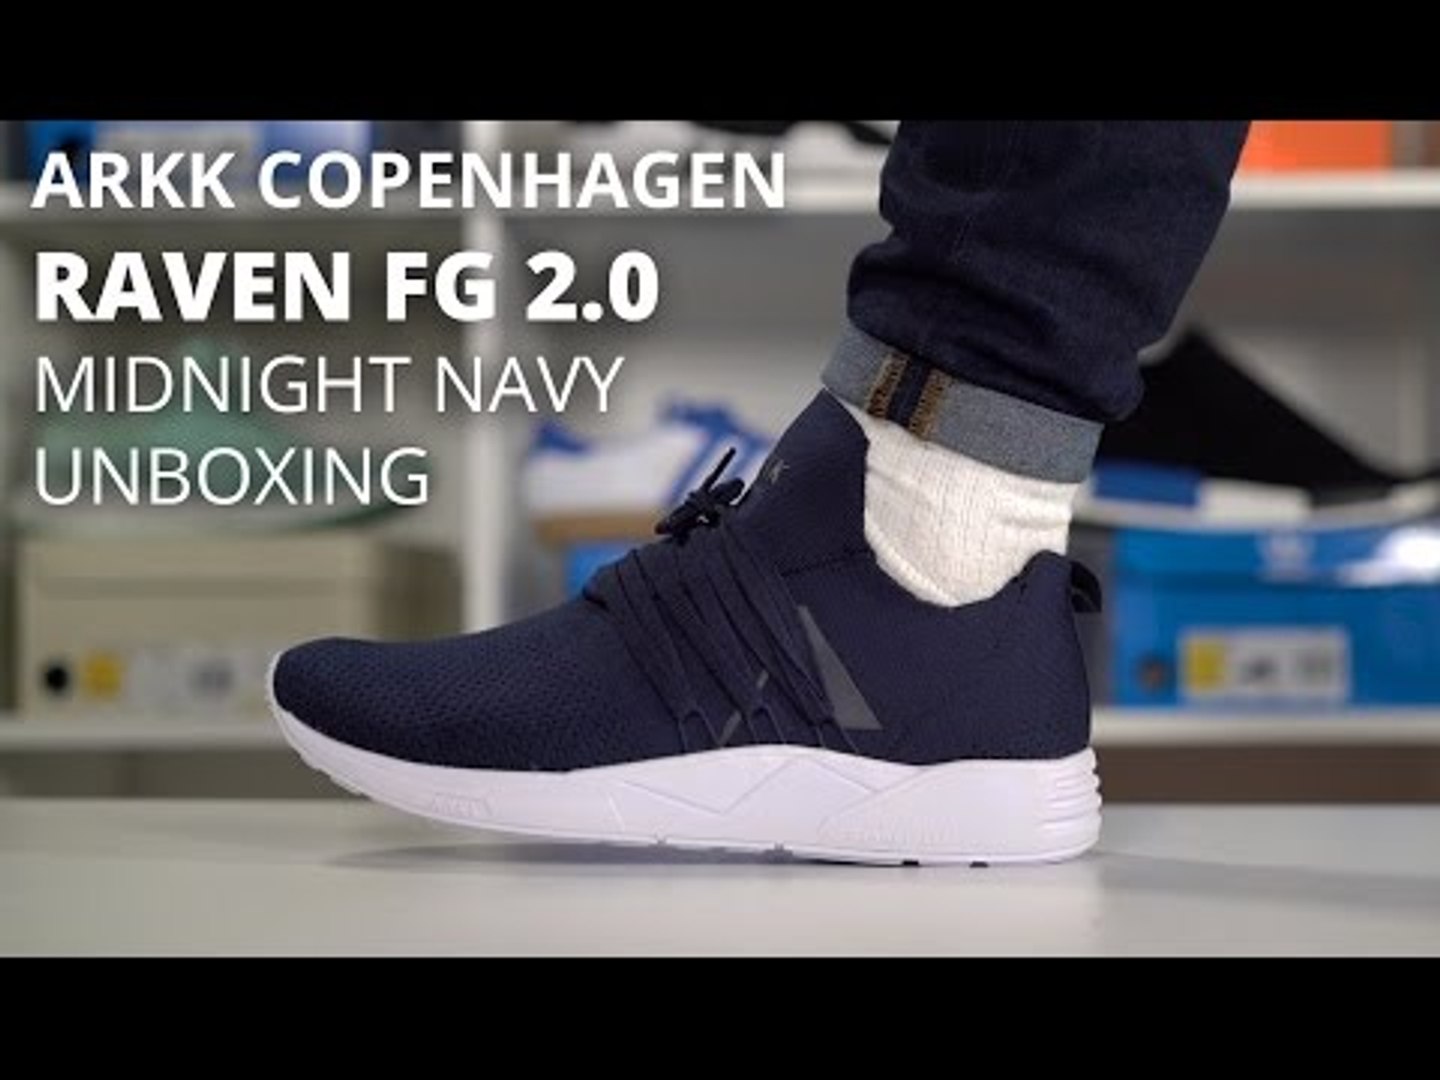 Arkk Copenhagen Raven FG 2.0 Midnight Navy Unboxing - video Dailymotion